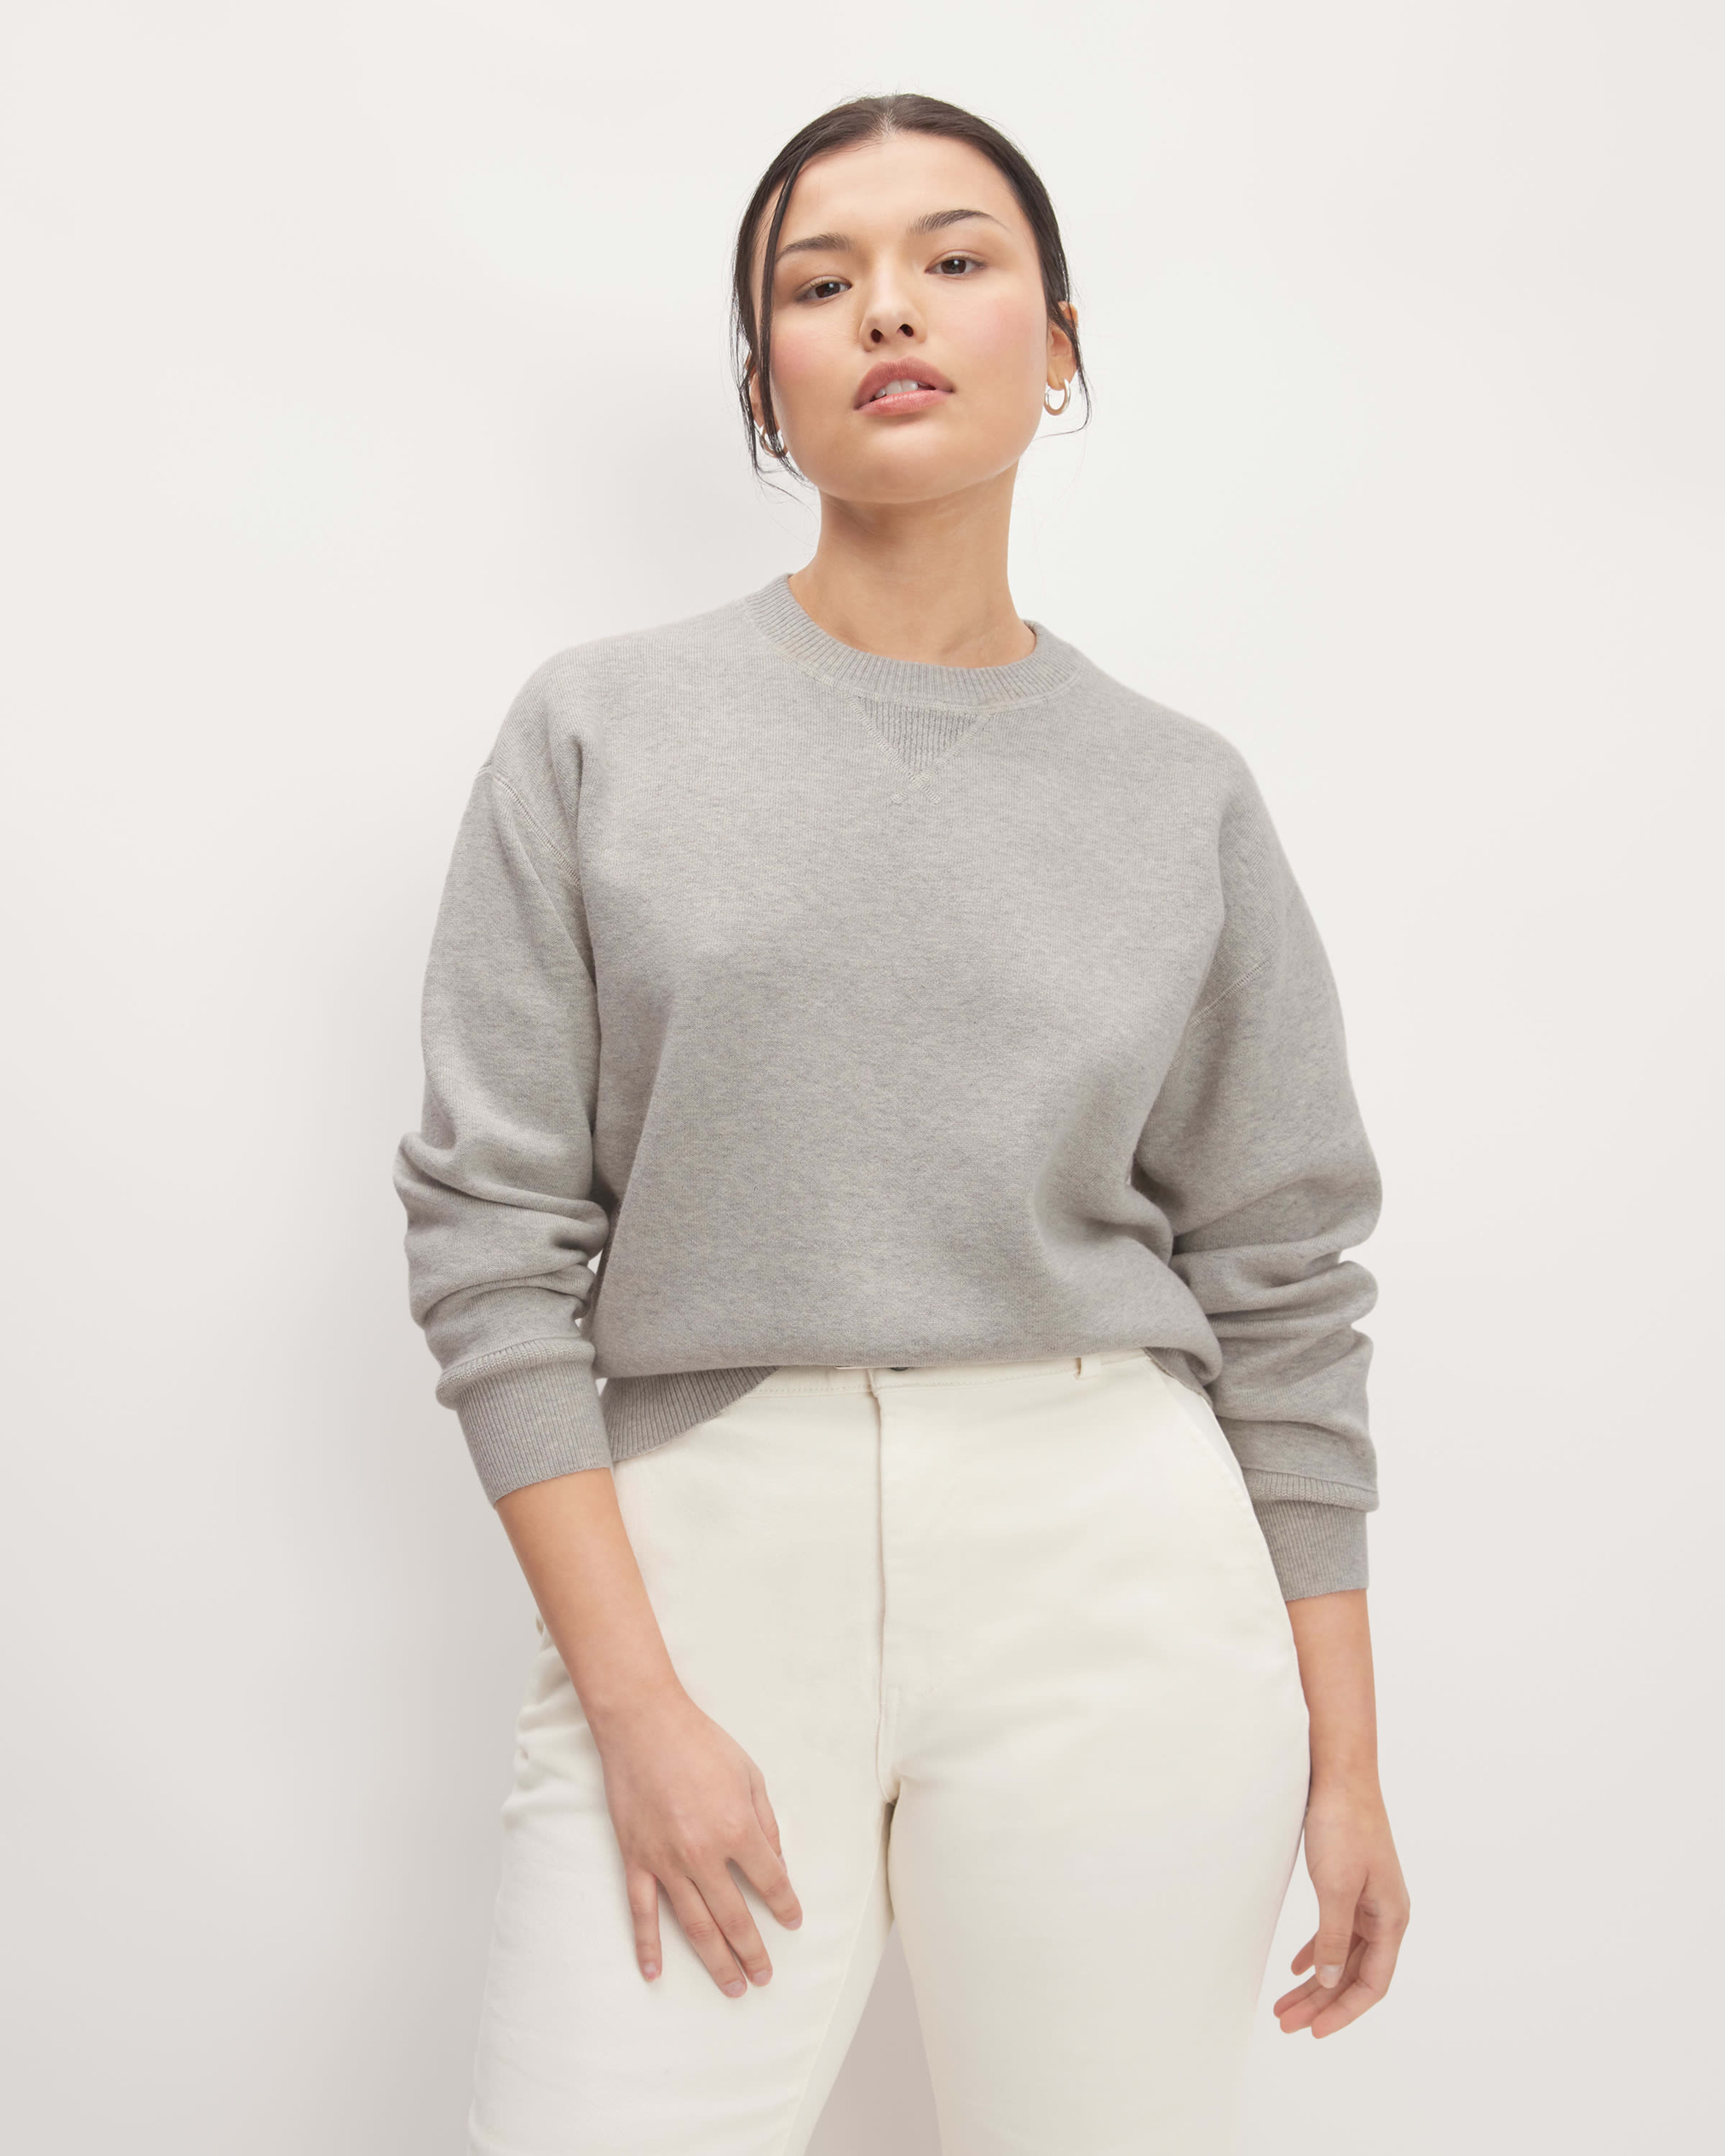 Women's Sweaters & Cardigans in Grey – Everlane